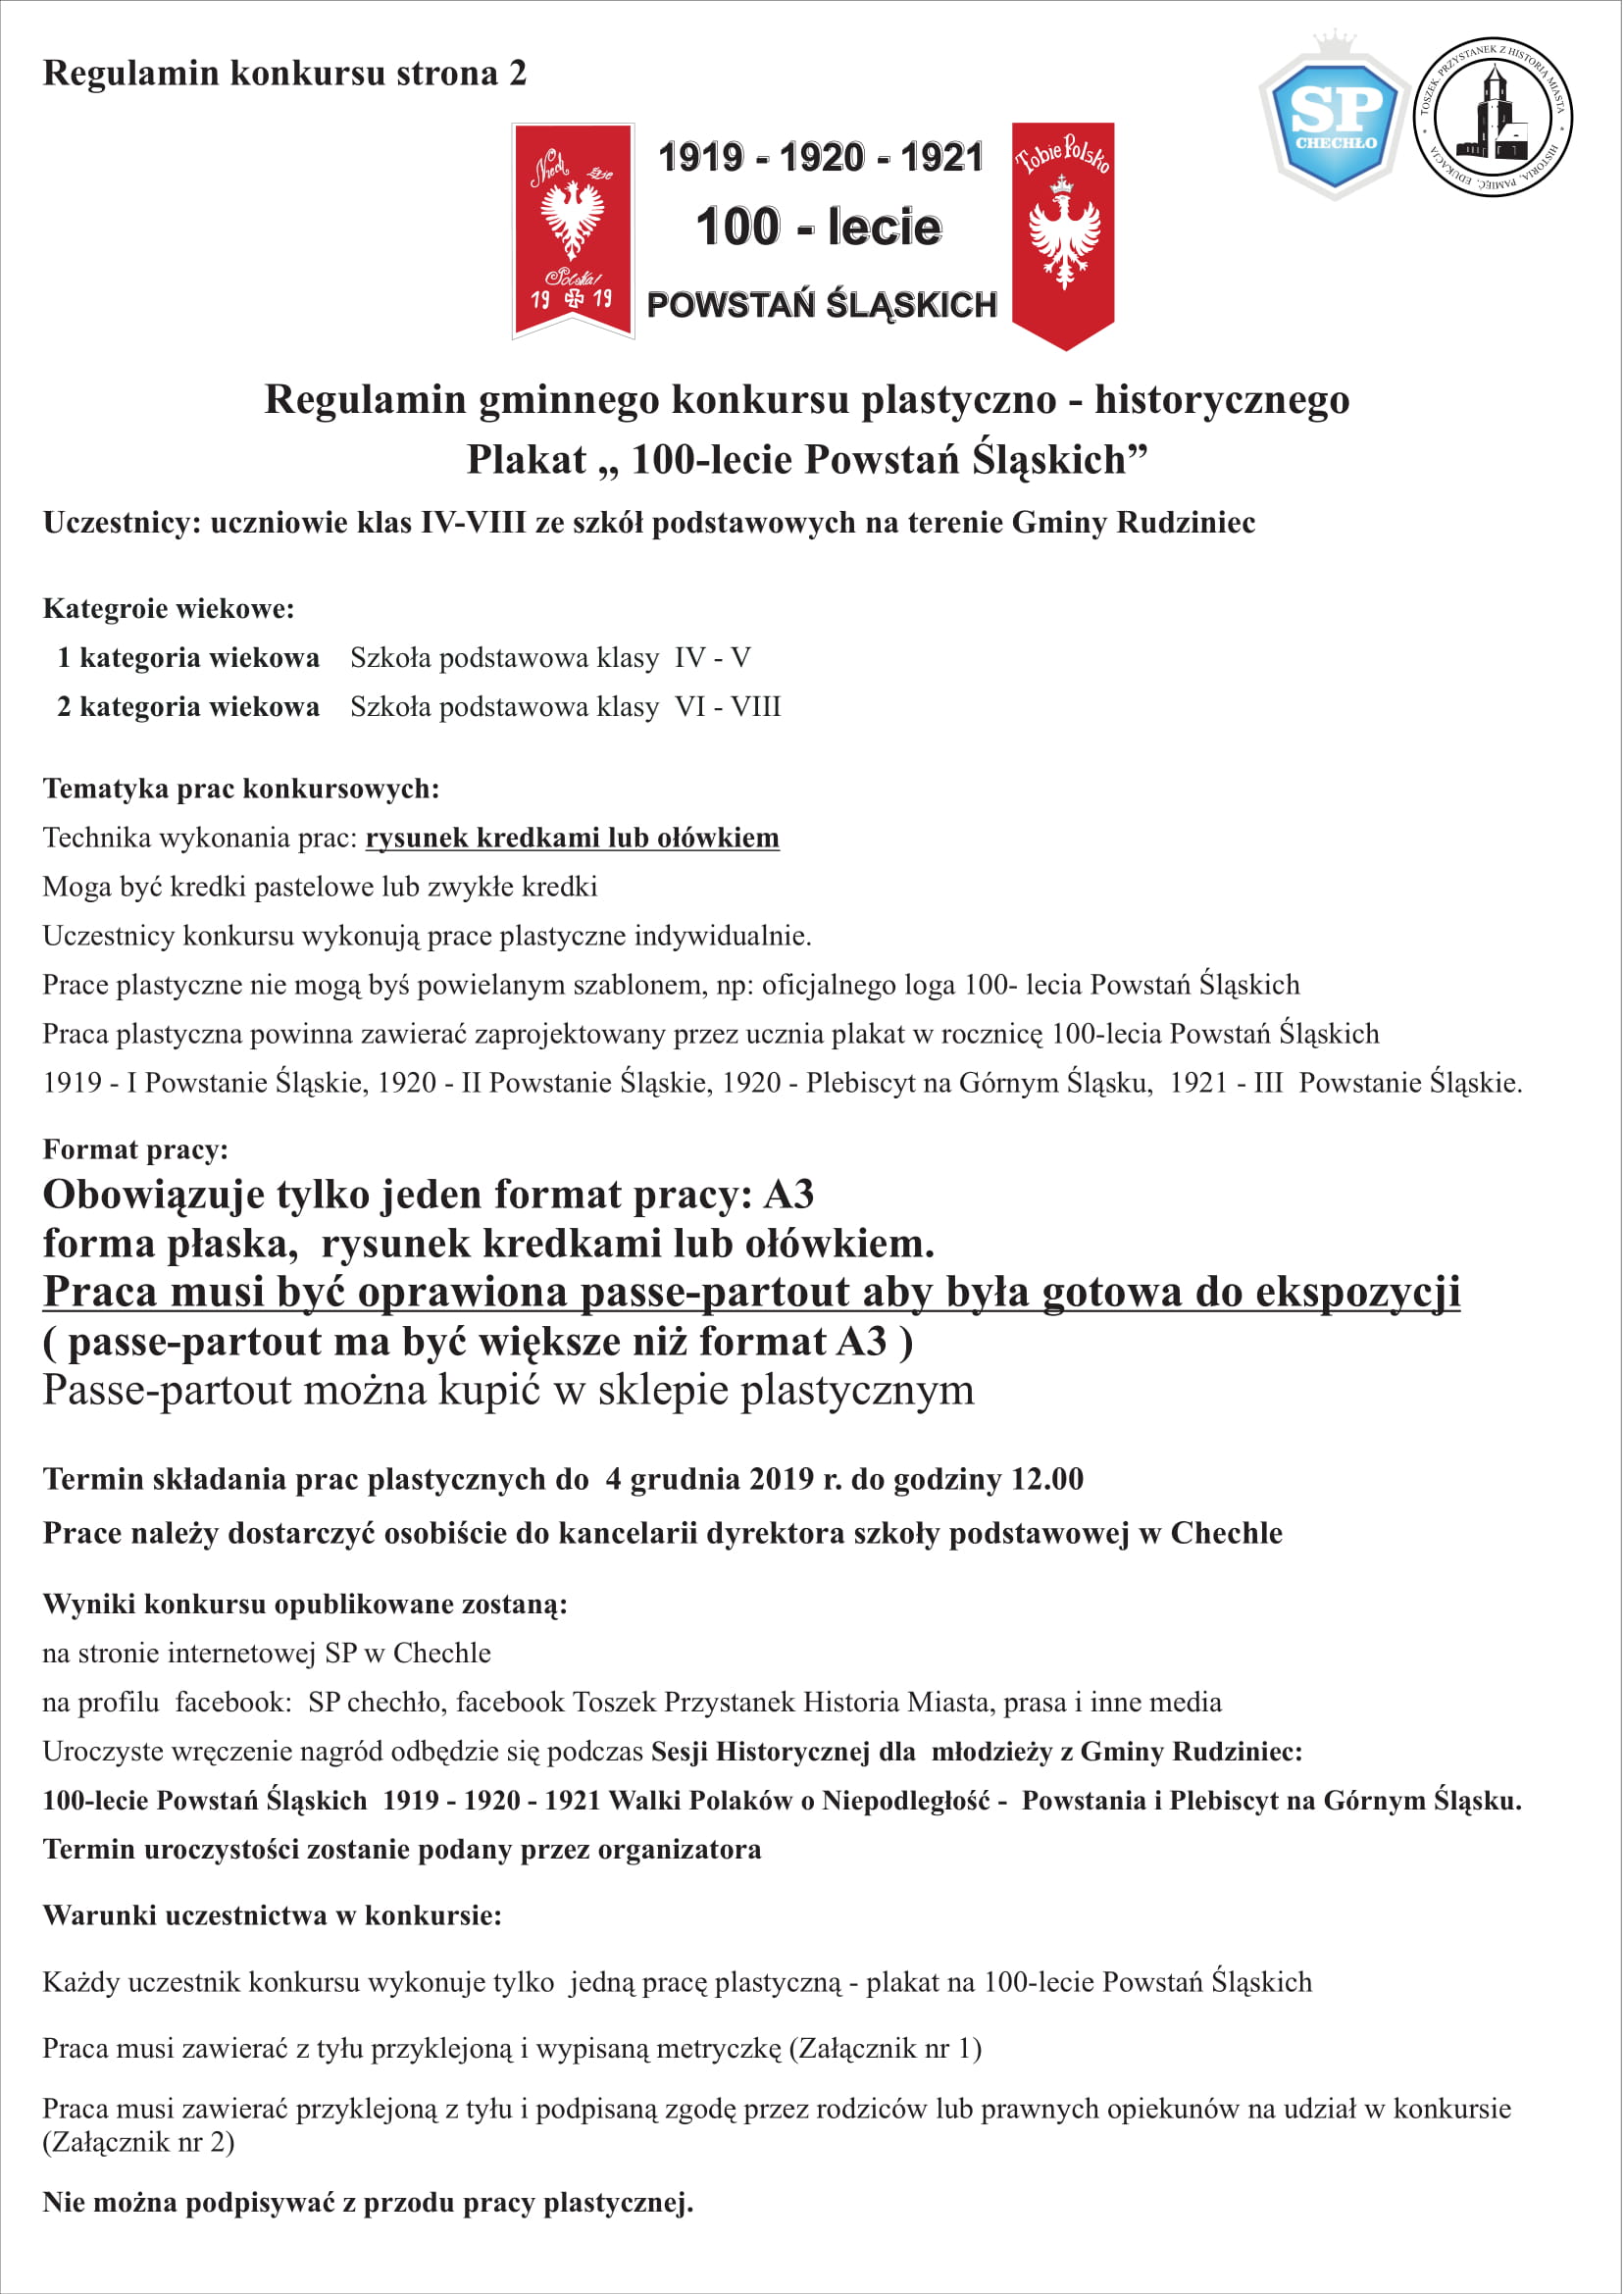 SP Chechlo Regulamin Szkolnego Konkursu Plakat na 100 lecie Powstan Slaskich 2019-1-2